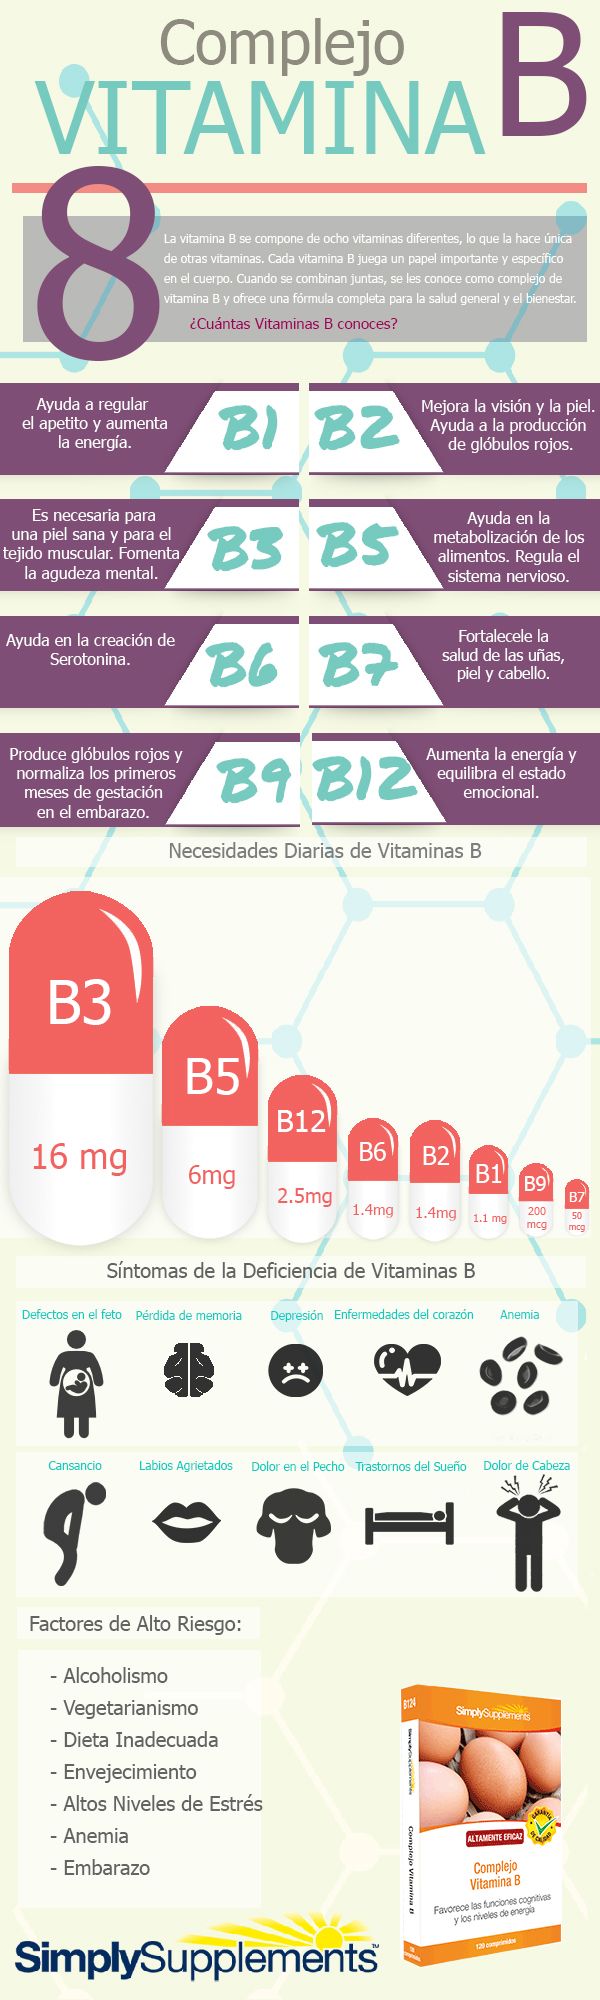 tipos de vitamina B